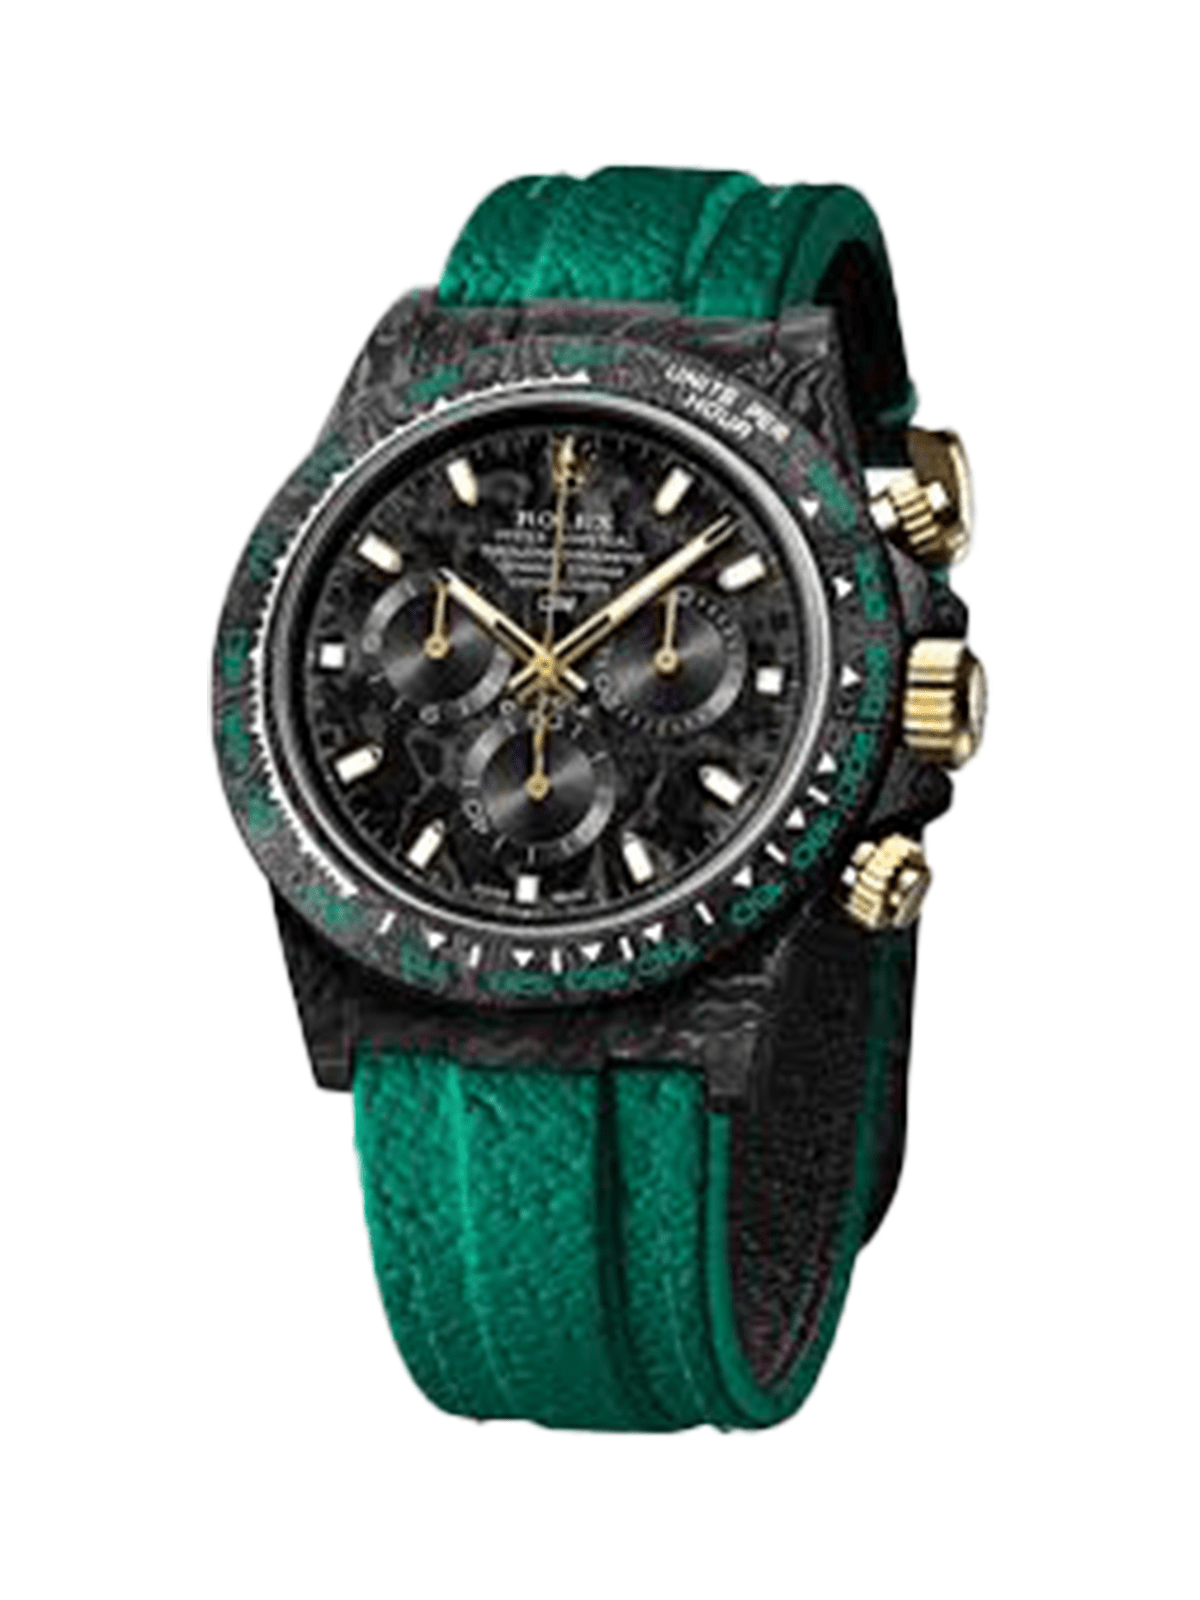 Rolex DiW Daytona Emerald Carbon